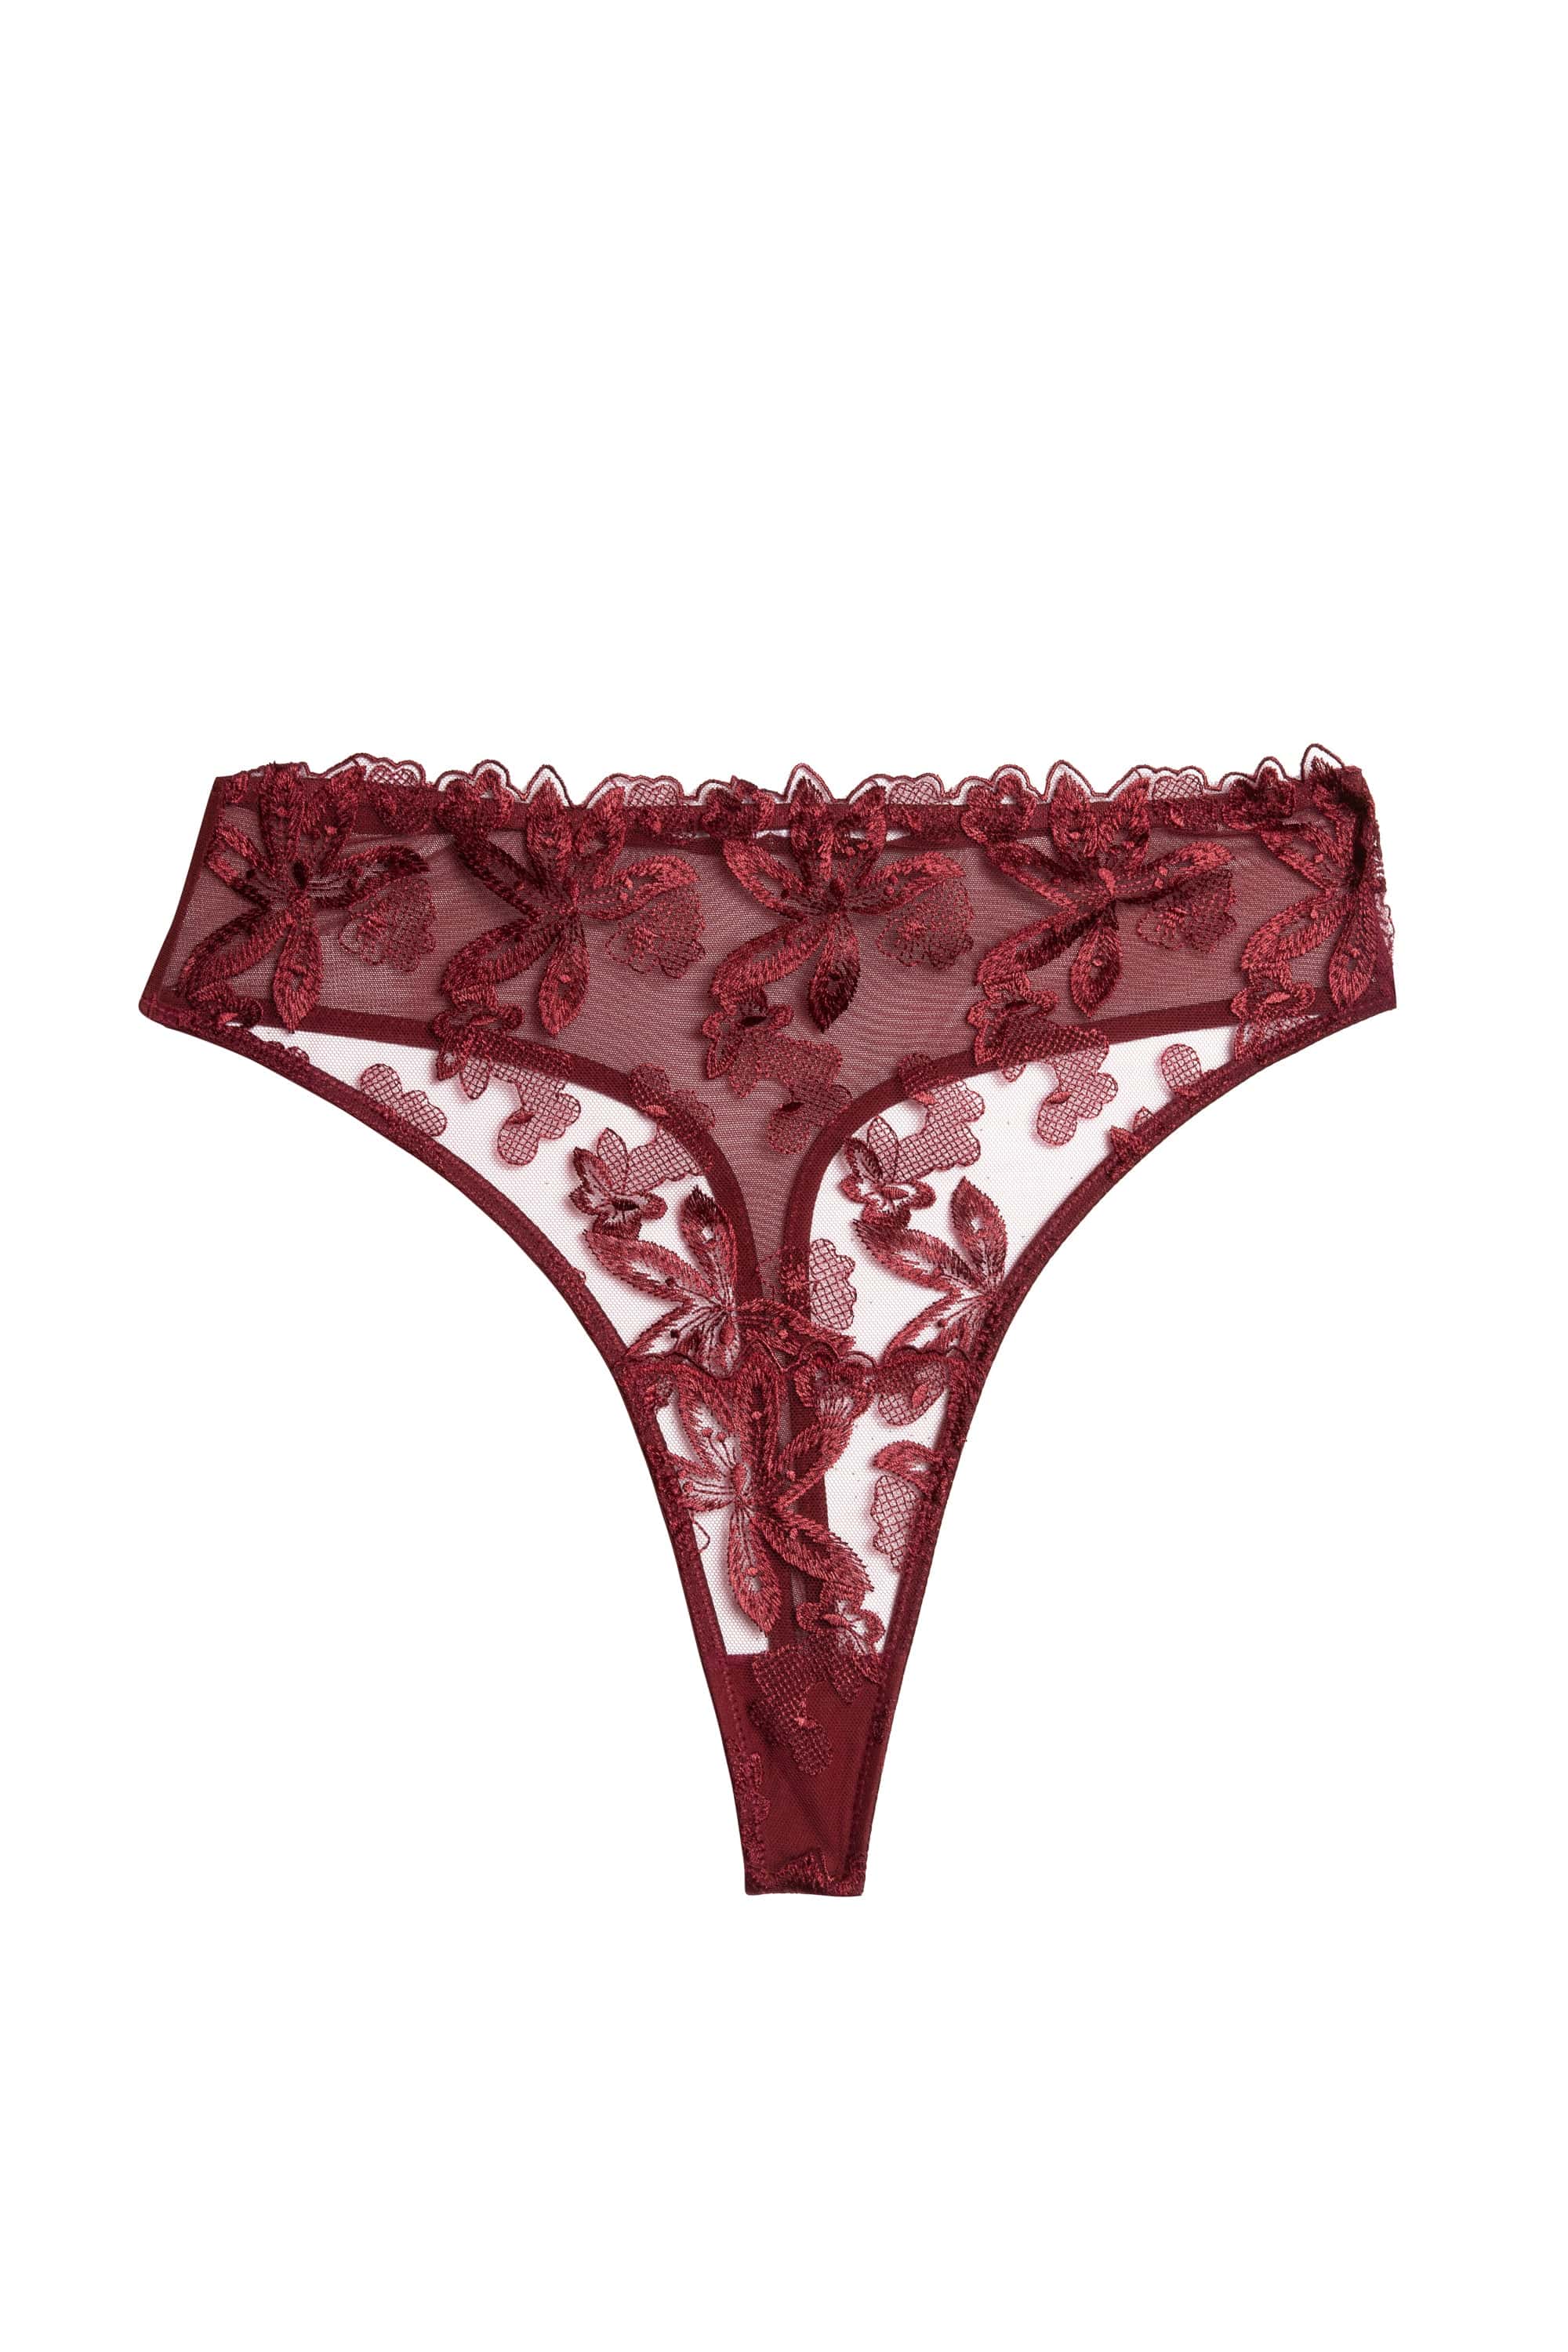 Eva Dark Cherry Graphic Embroidery High Waist Thong – Playful Promises